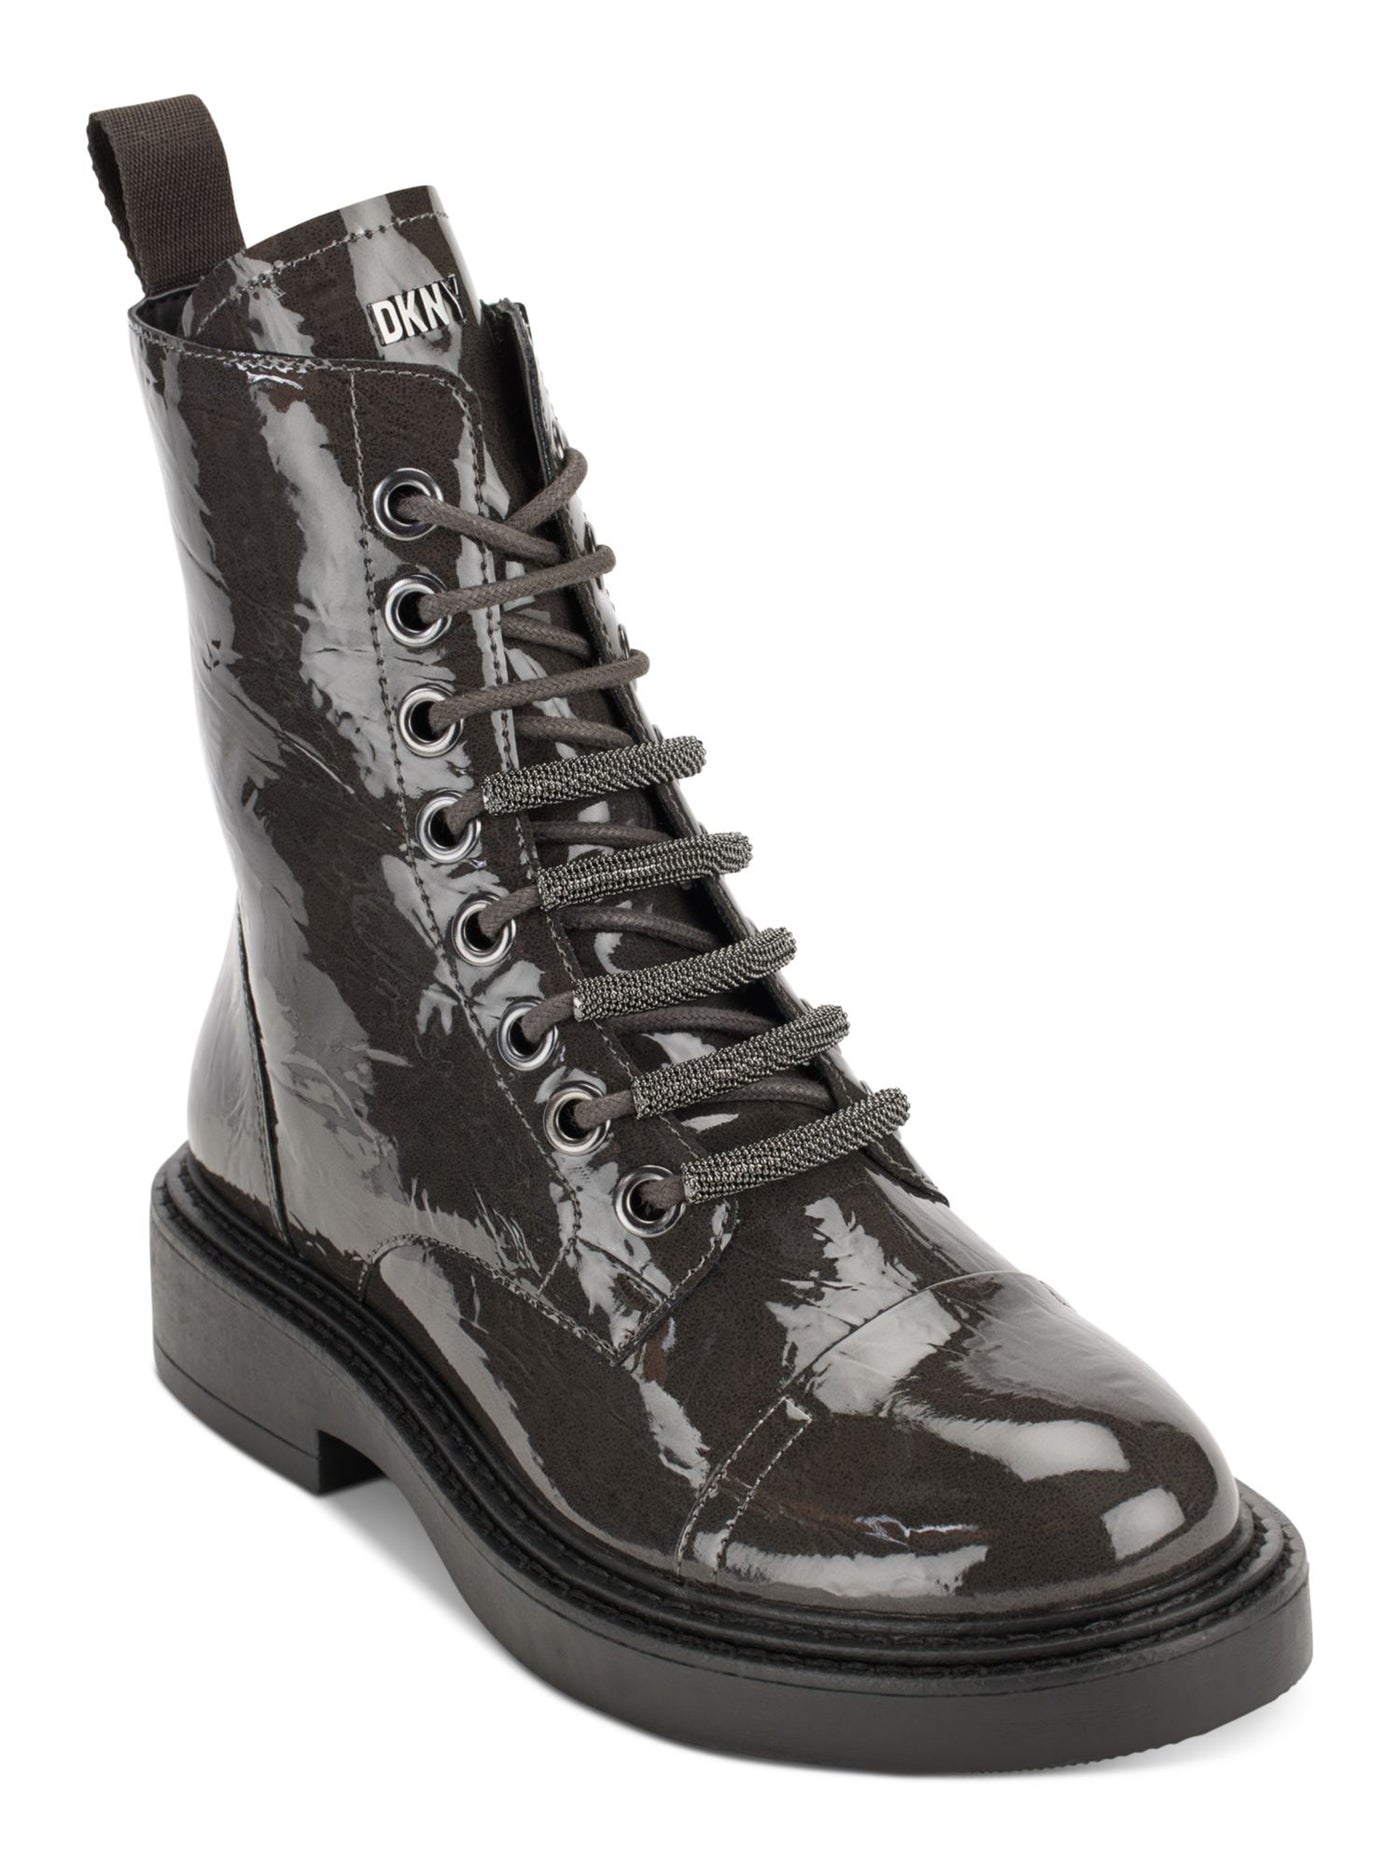 DKNY Womens Gray Metallic Malaya Almond Toe Block Heel Lace-Up Combat Boots 7 M